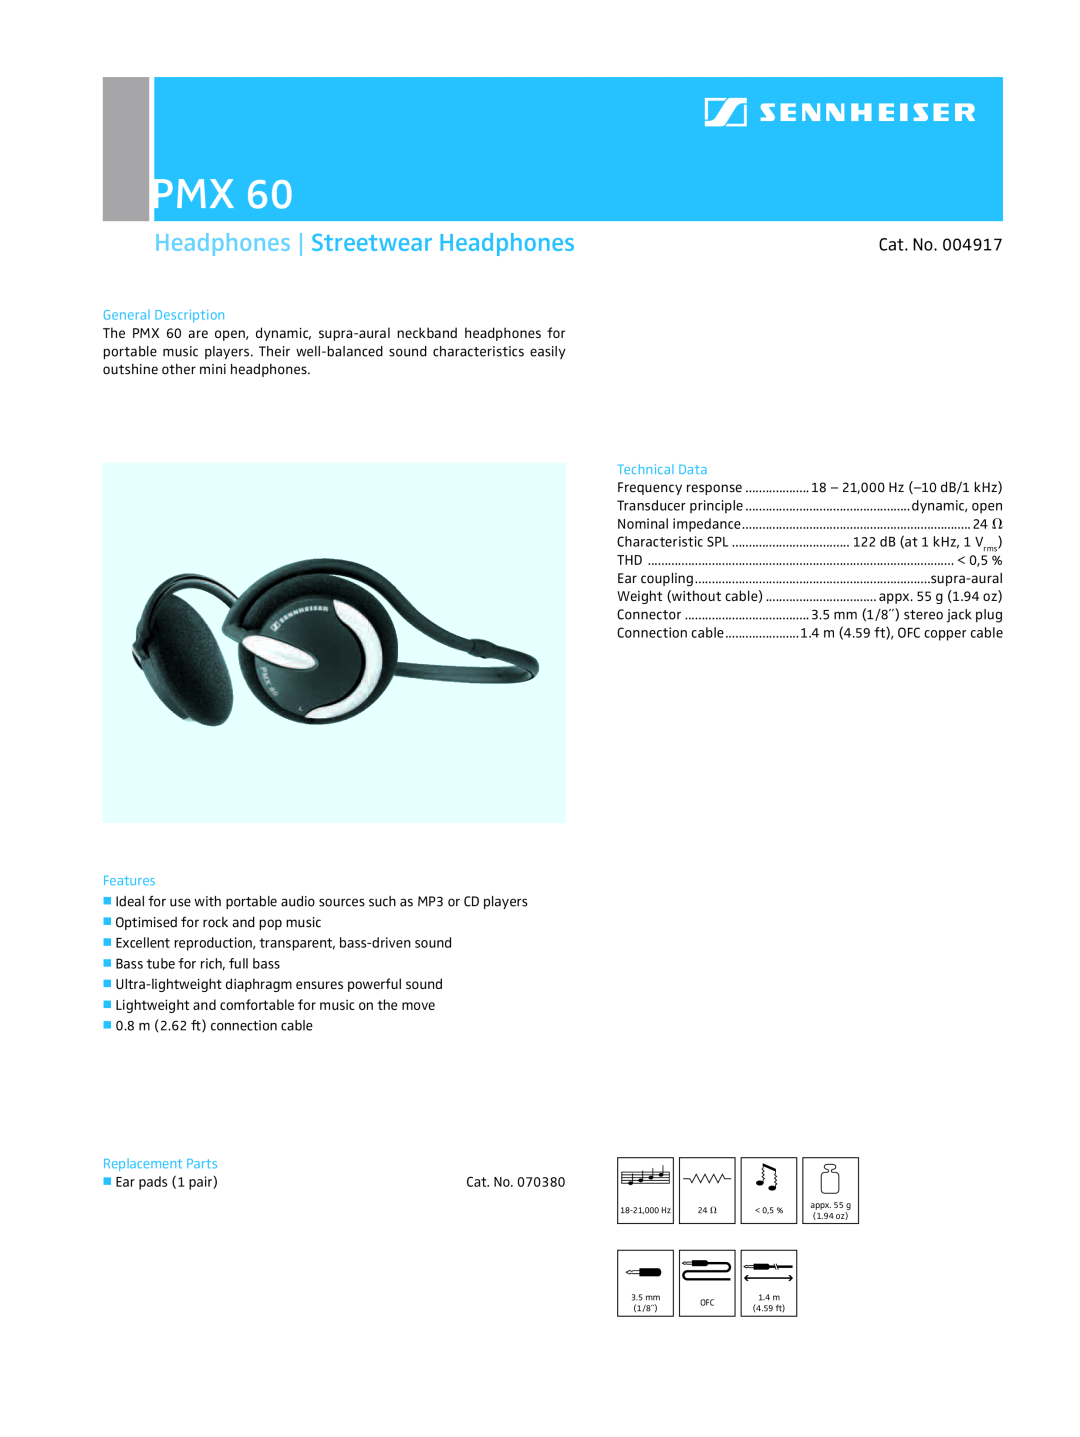 Sennheiser PMX 60 manual Headphones Streetwear Headphones, Cat. No, General Description, Technical Data, Features 